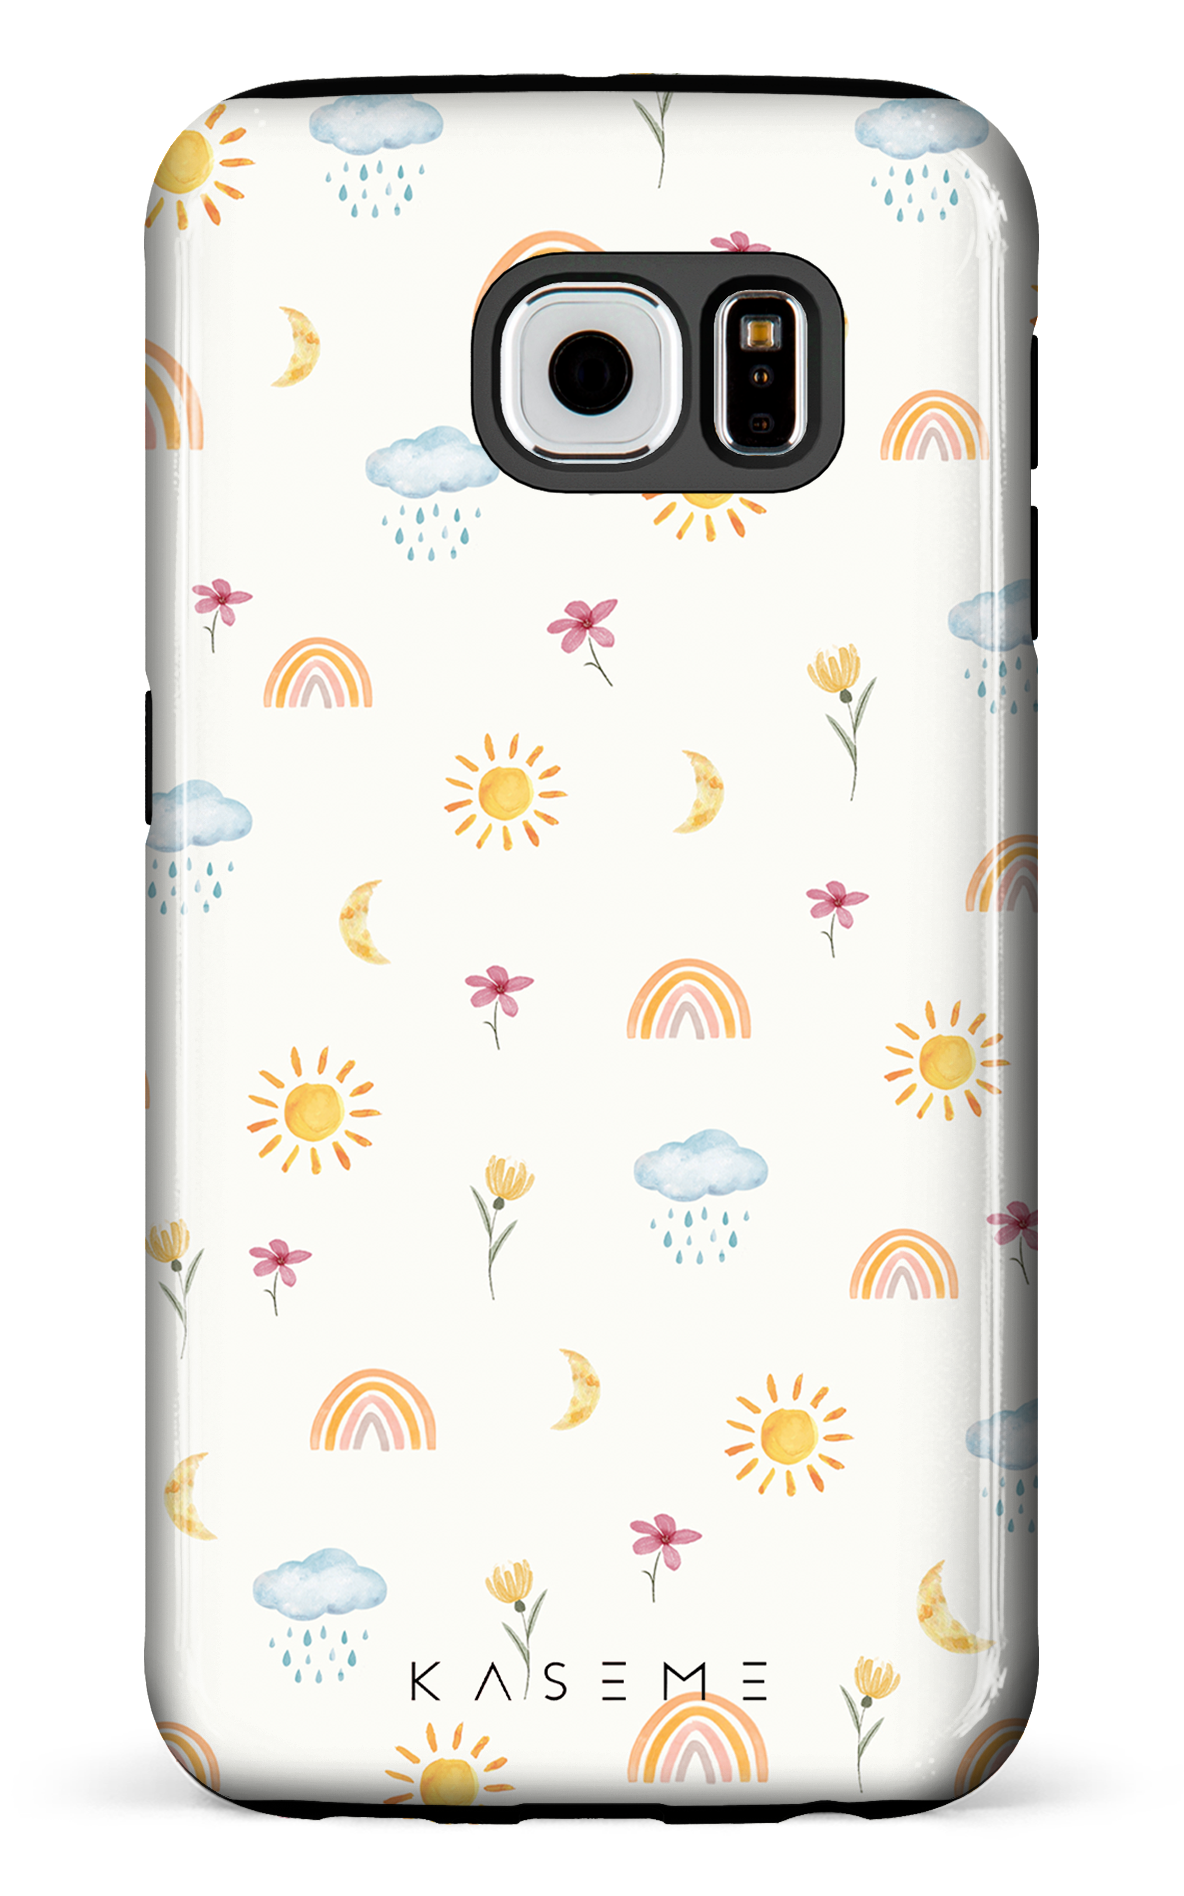 Cloudy - Galaxy S6